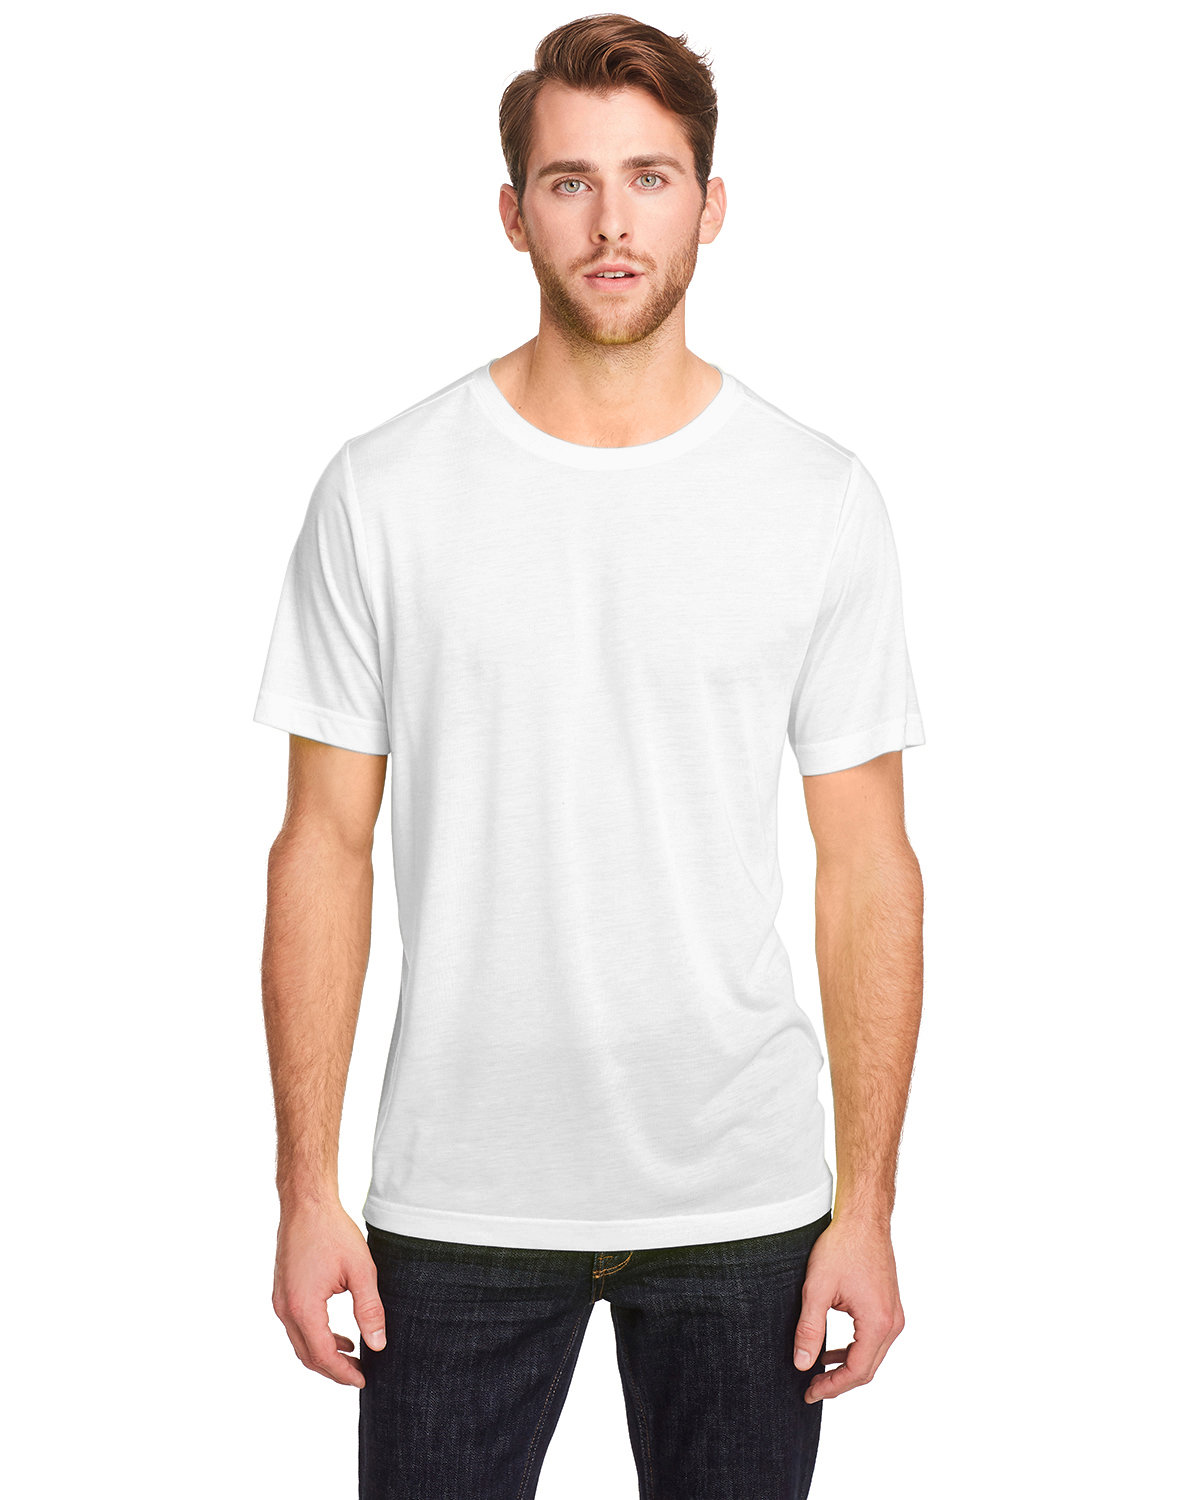 Core 365 Adult Fusion ChromaSoft Performance T-Shirt WHITE 